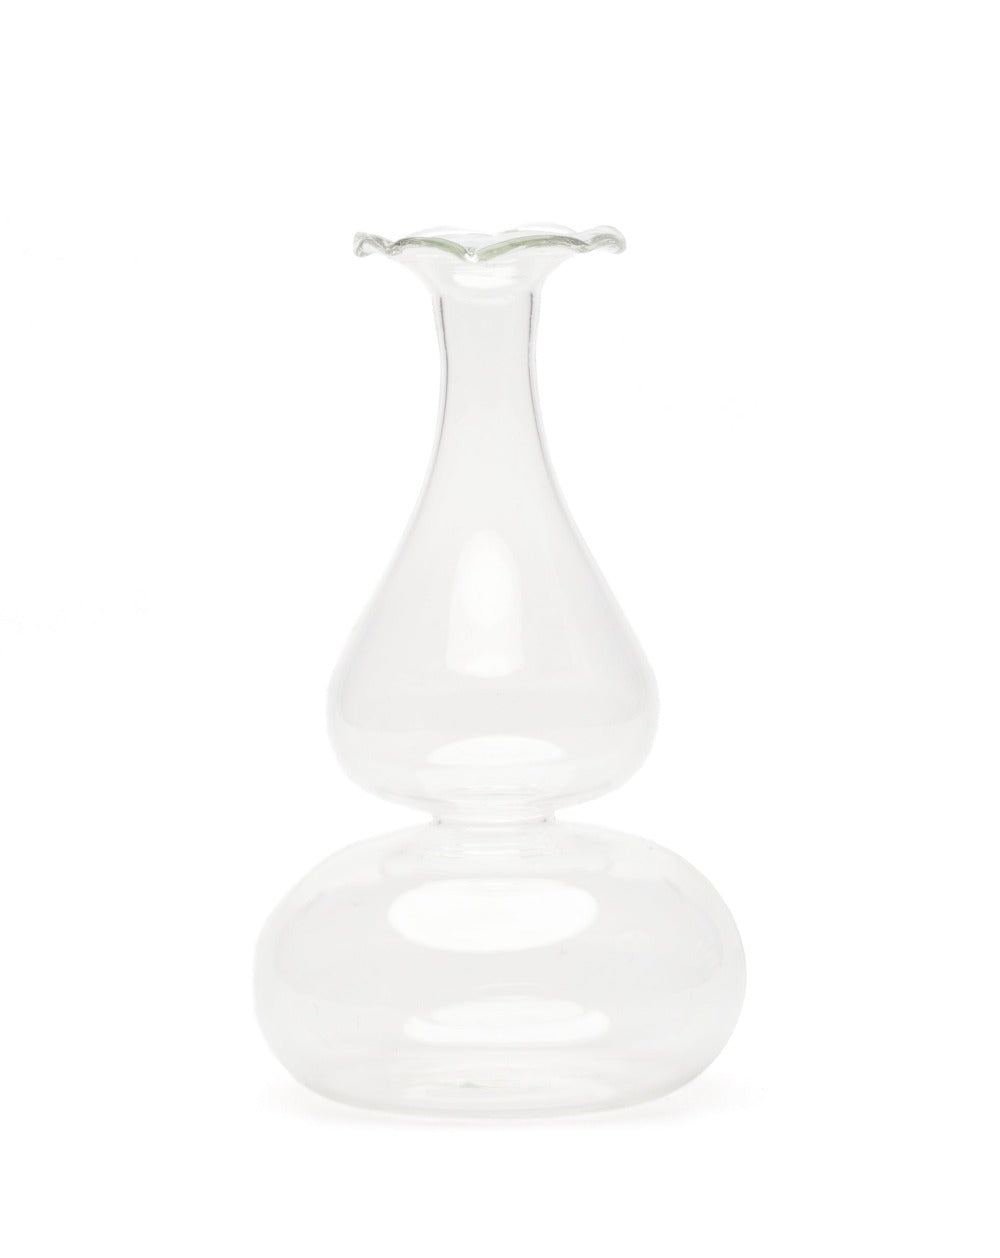 Single modern wobbly bud vase